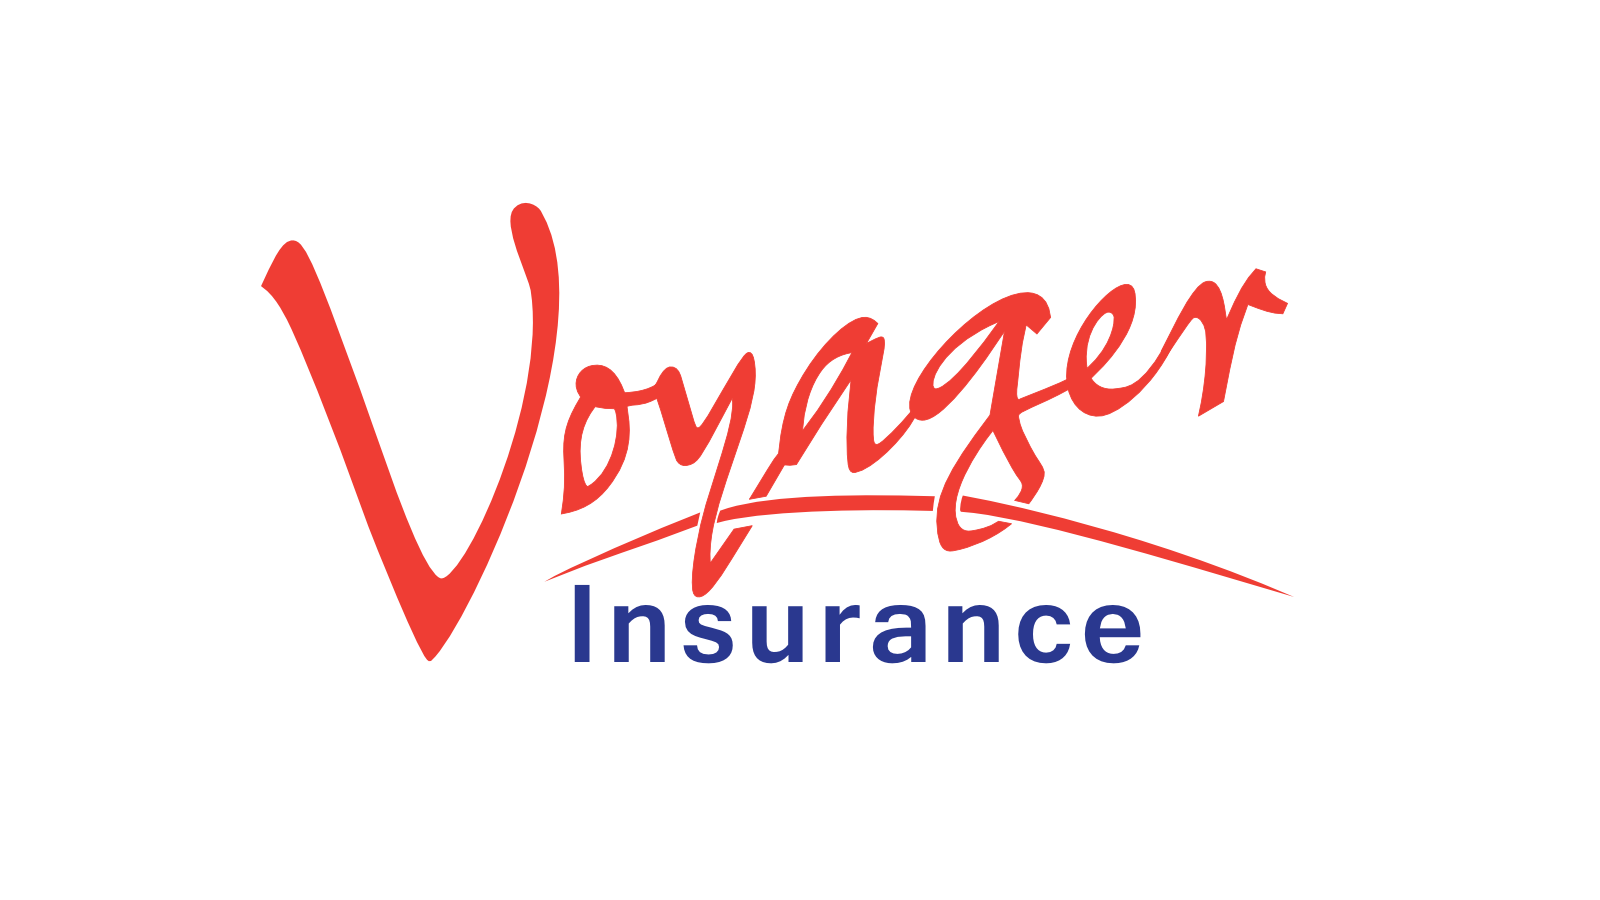 Voyager Insurance logo